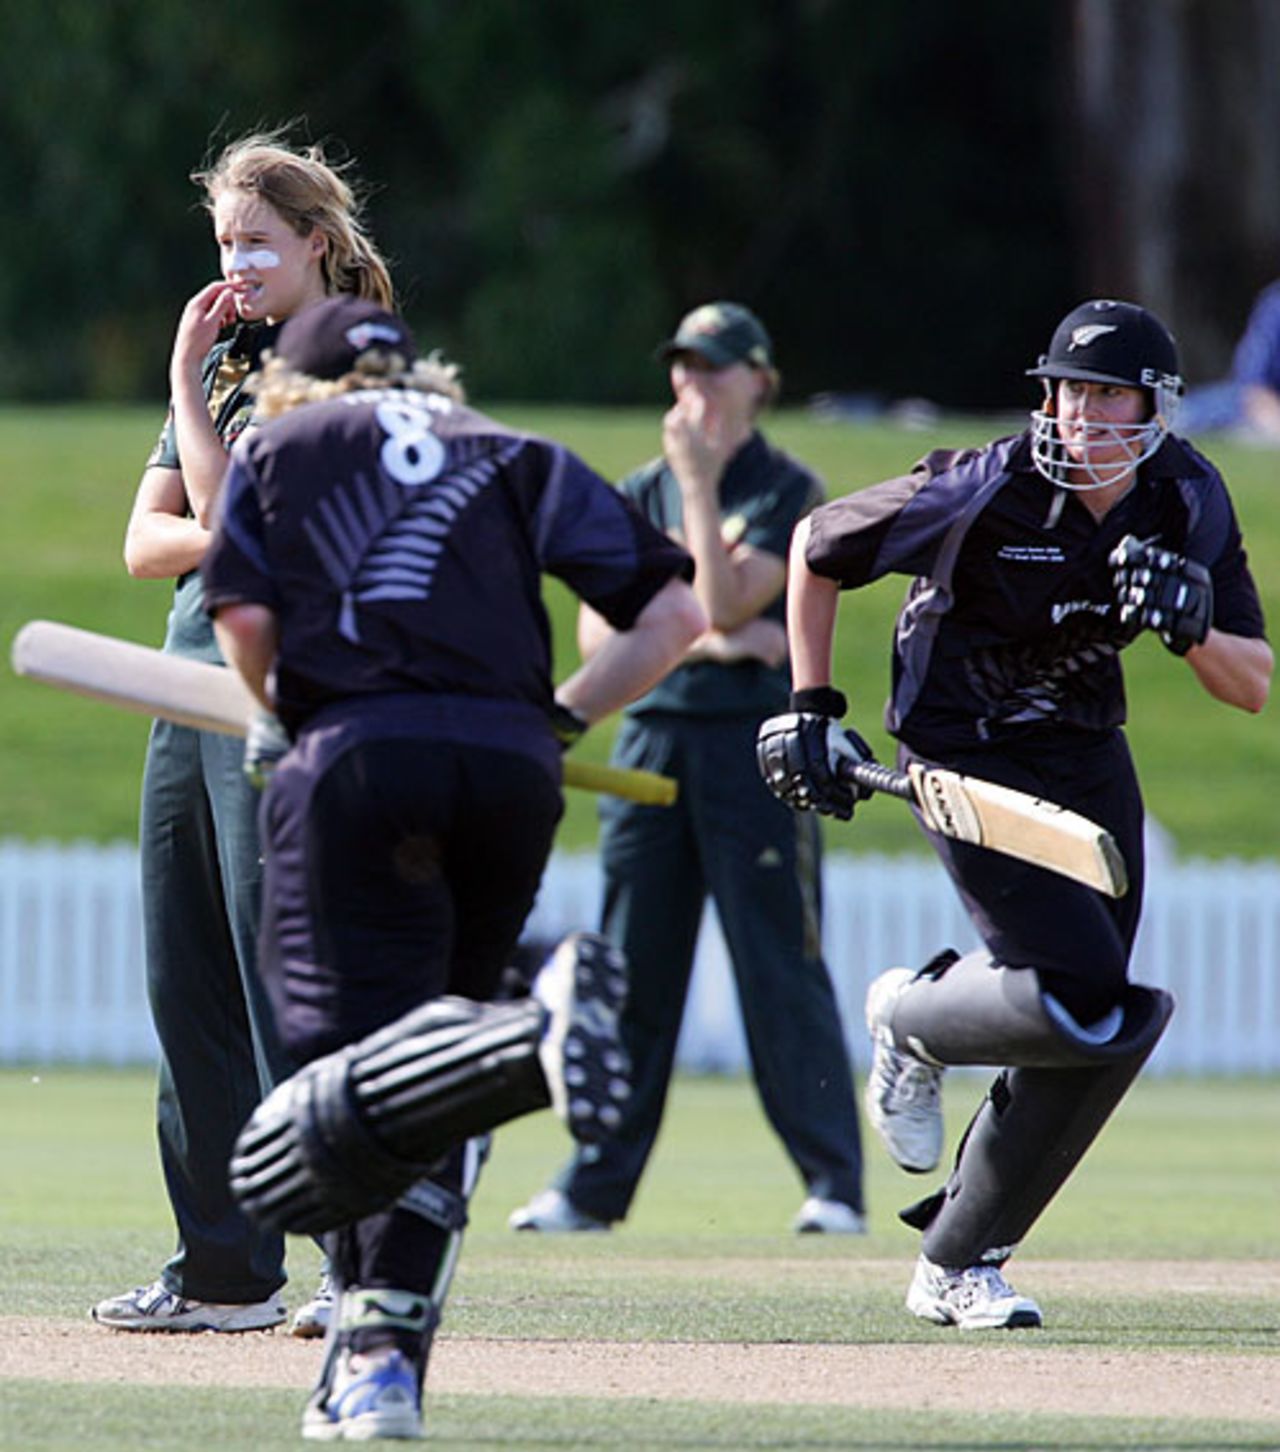 New Zealand batsmen take a run as Ellyse Perry looks on, New Zealand women v Australia women, 4th ODI, Rose Bowl, Lincoln, March 15, 2008